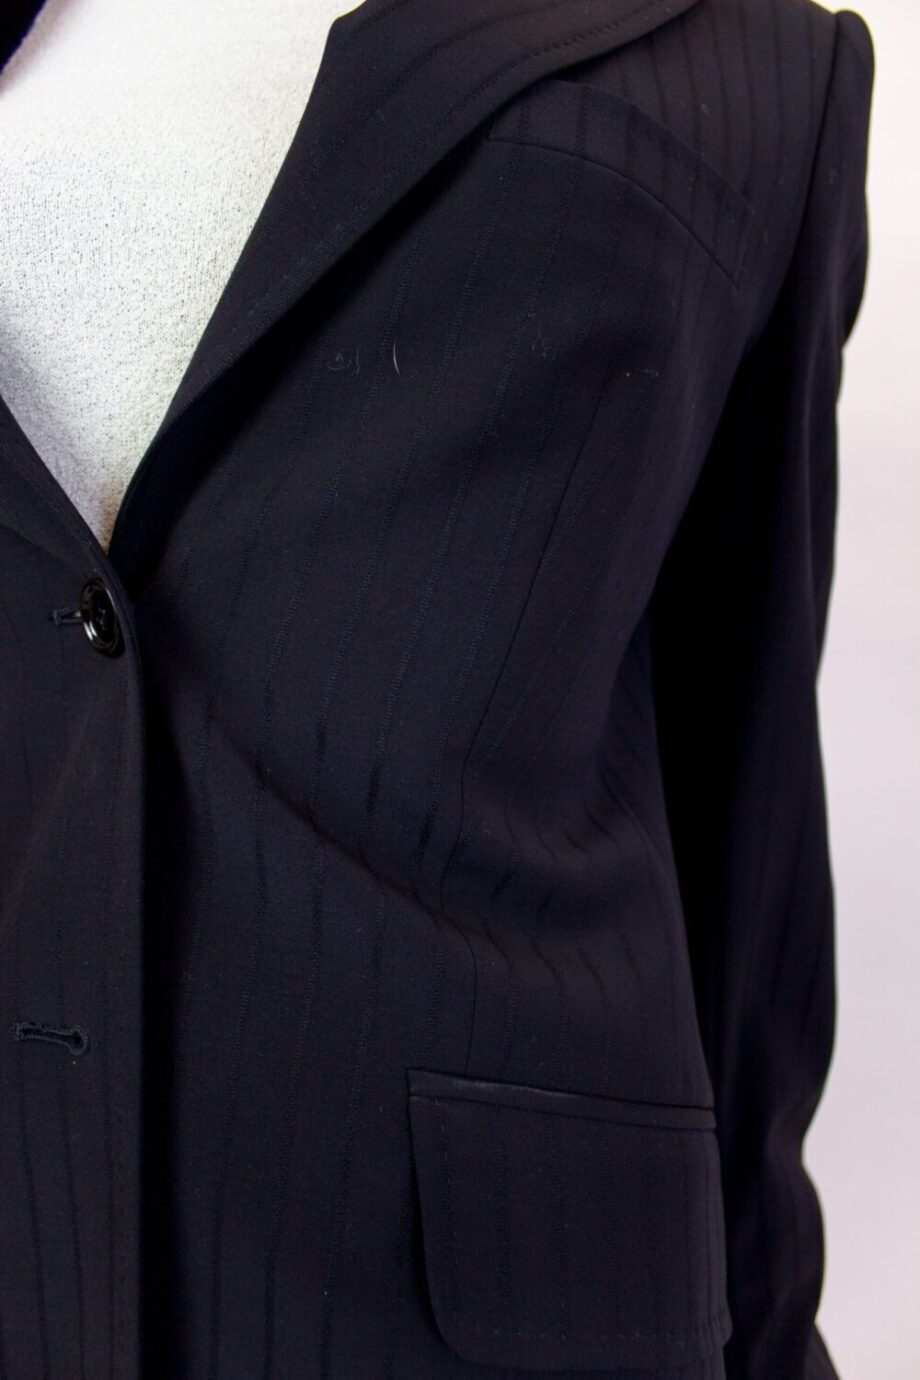 Dolce & Gabbana black blazer detail